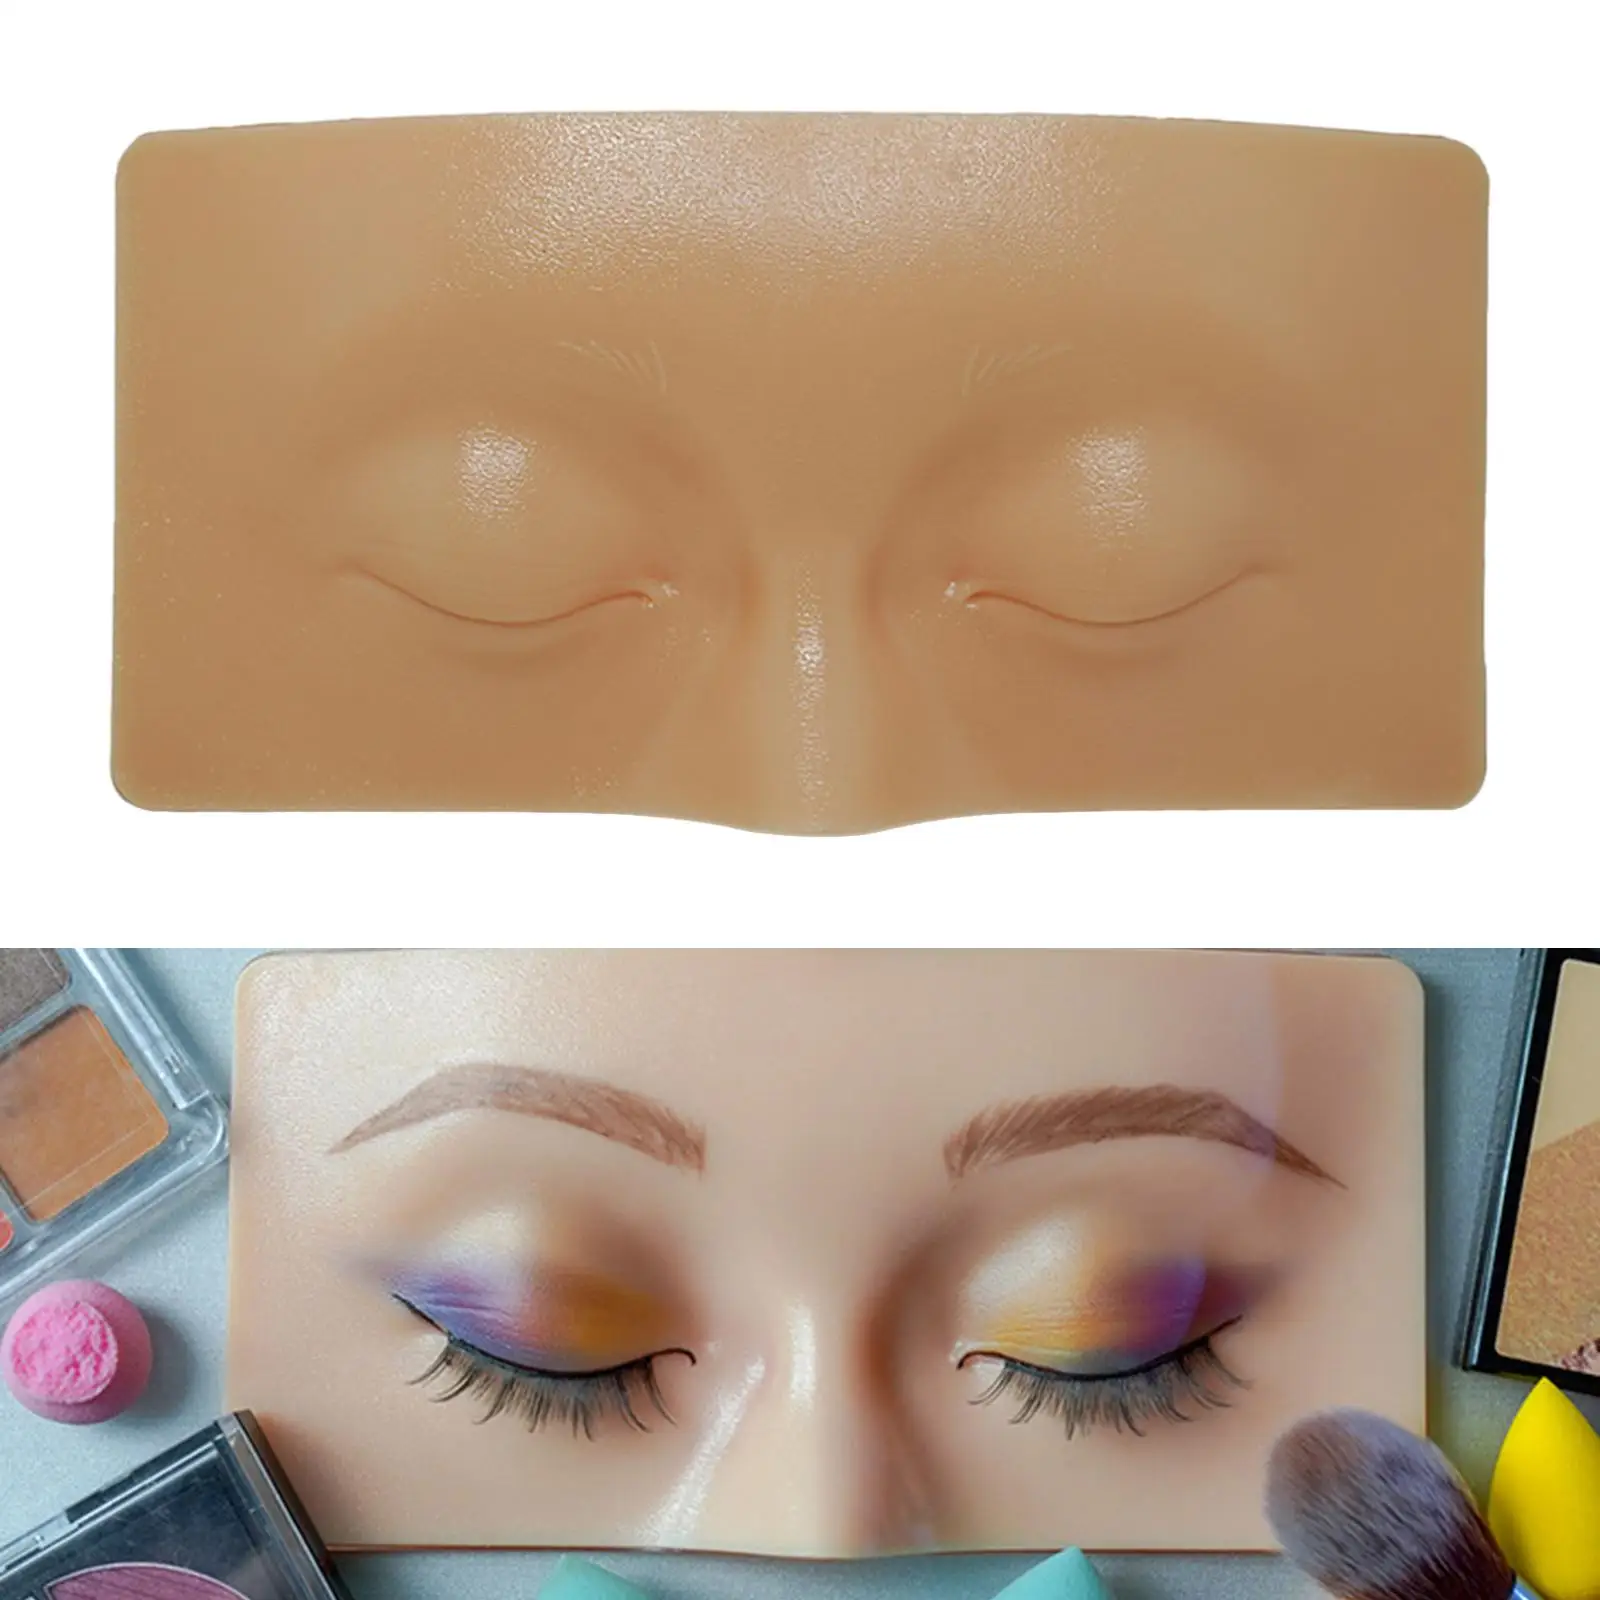 3D Realistic Makeup Practice board Lash Eyelids Training Reusable eye Makeup Practice Board for Makeup Artists